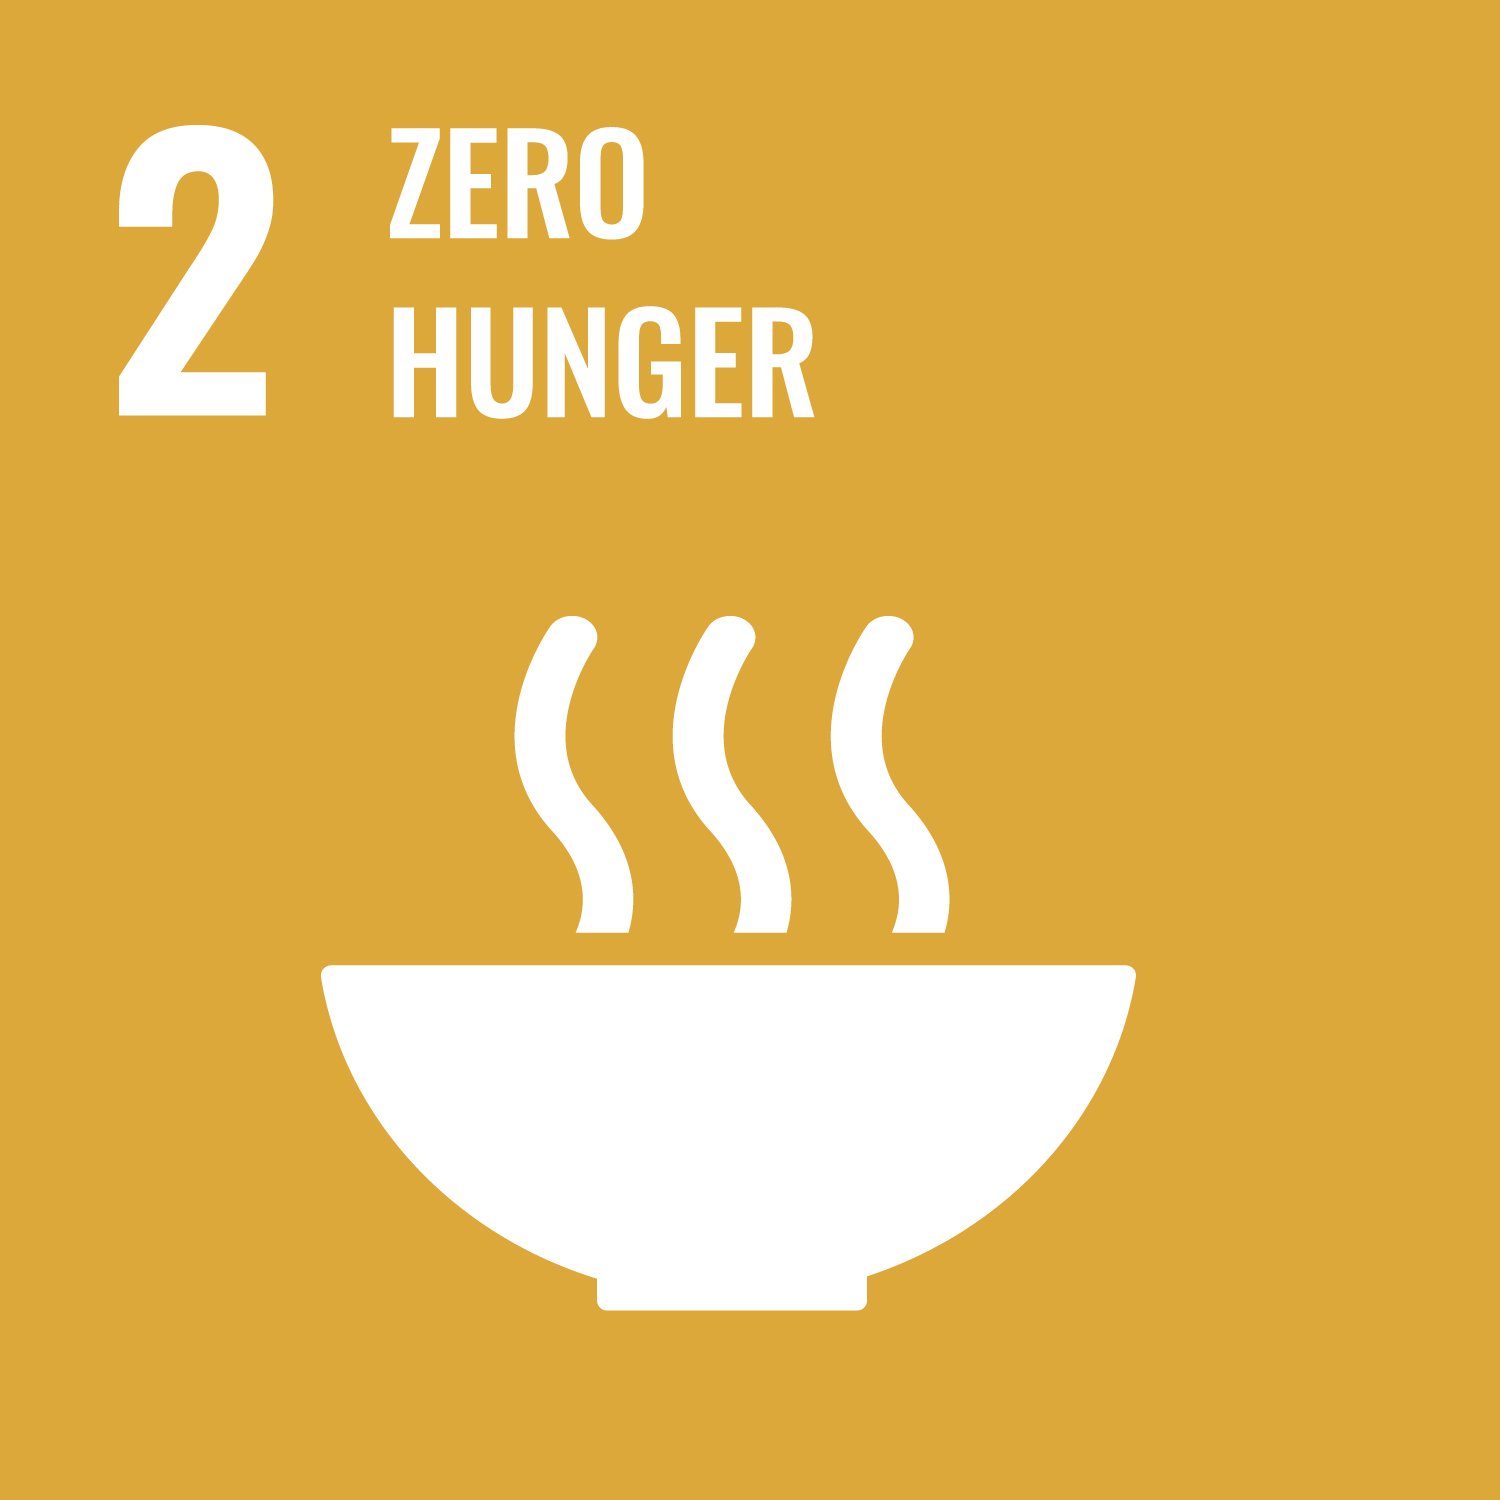 Sustainable Development Goal 02 logo: Zero hunger